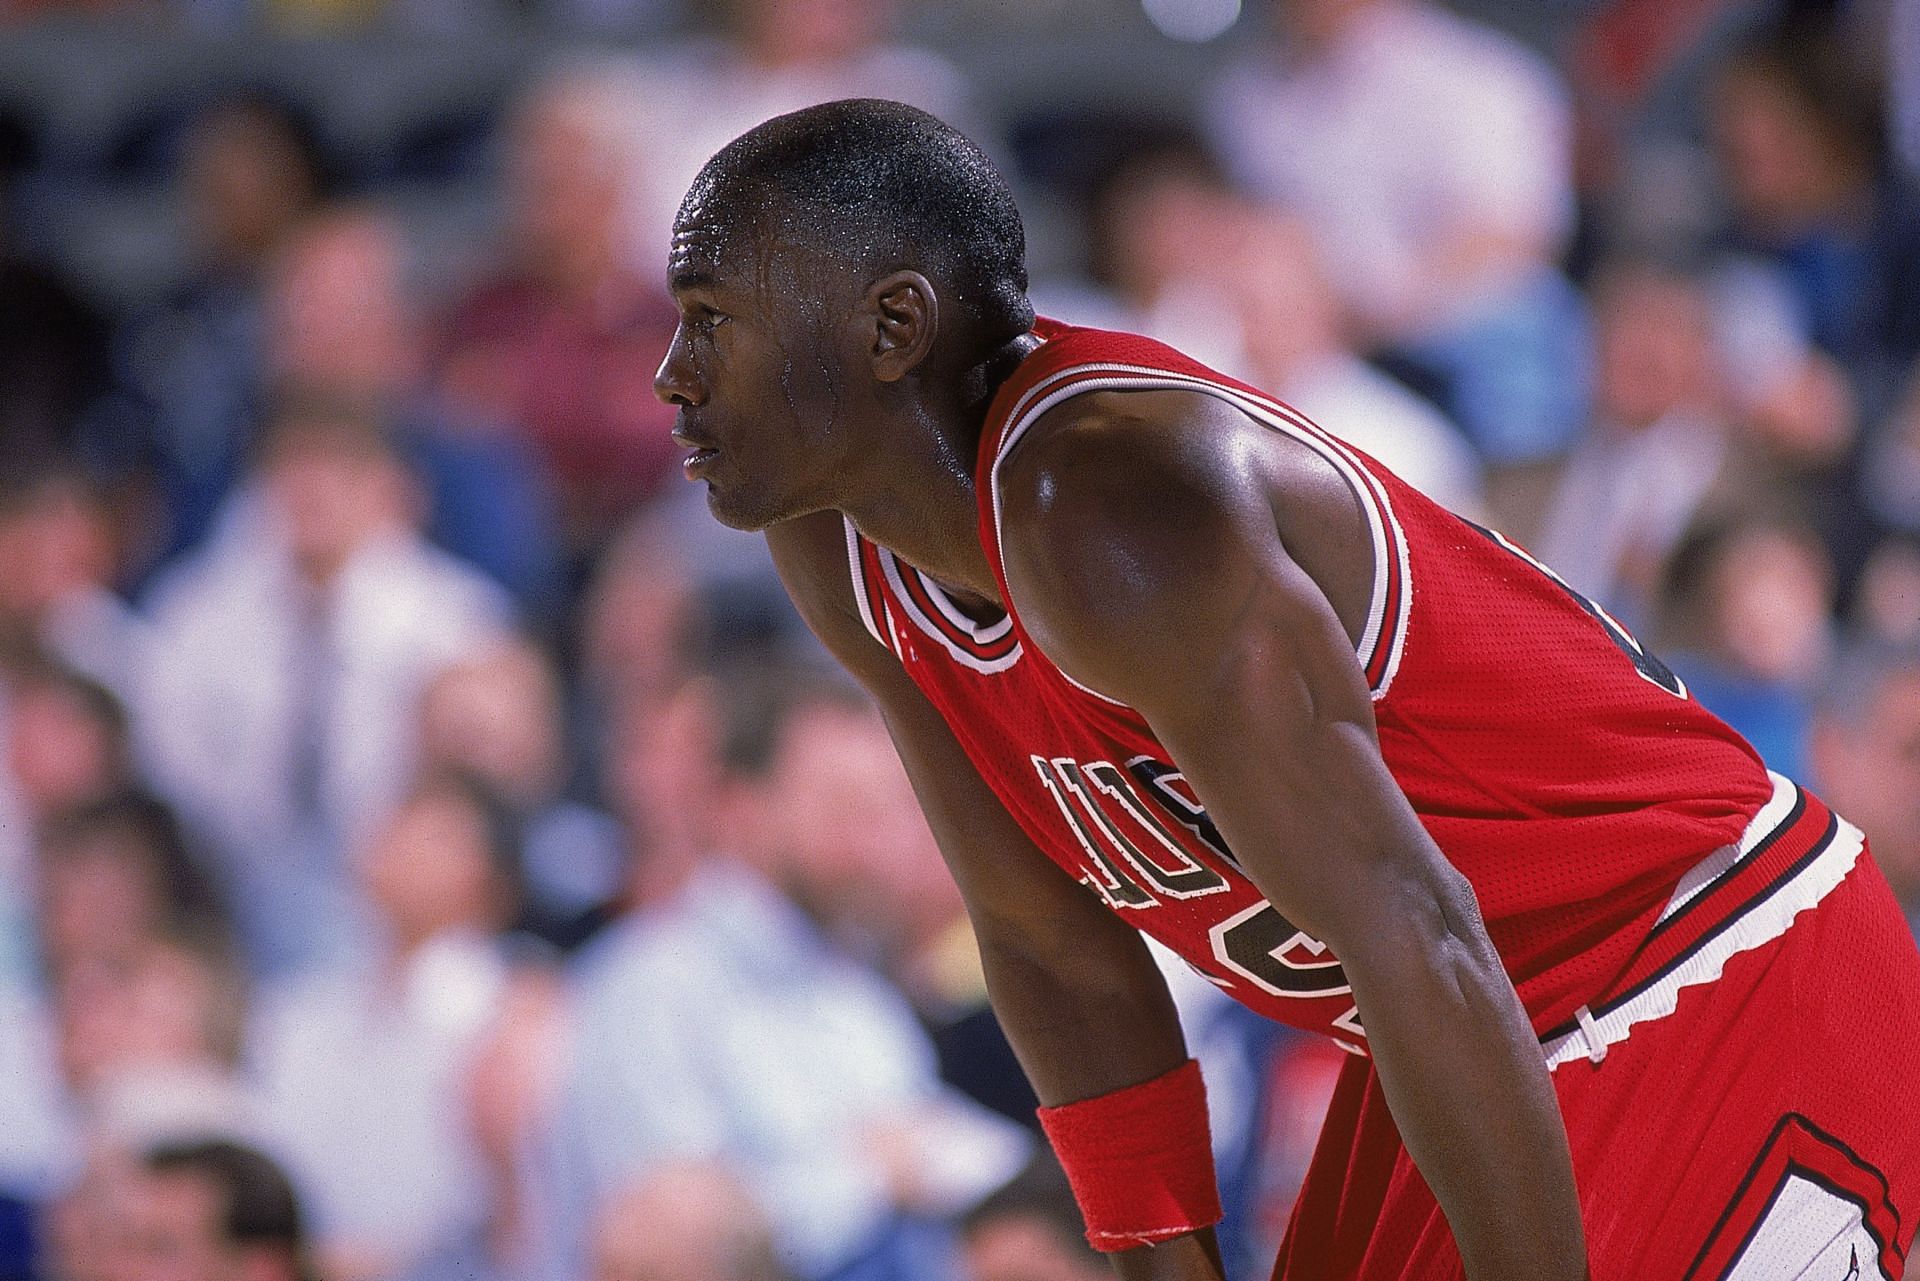 Michael Jordan of the Chicago Bulls in NBA action.